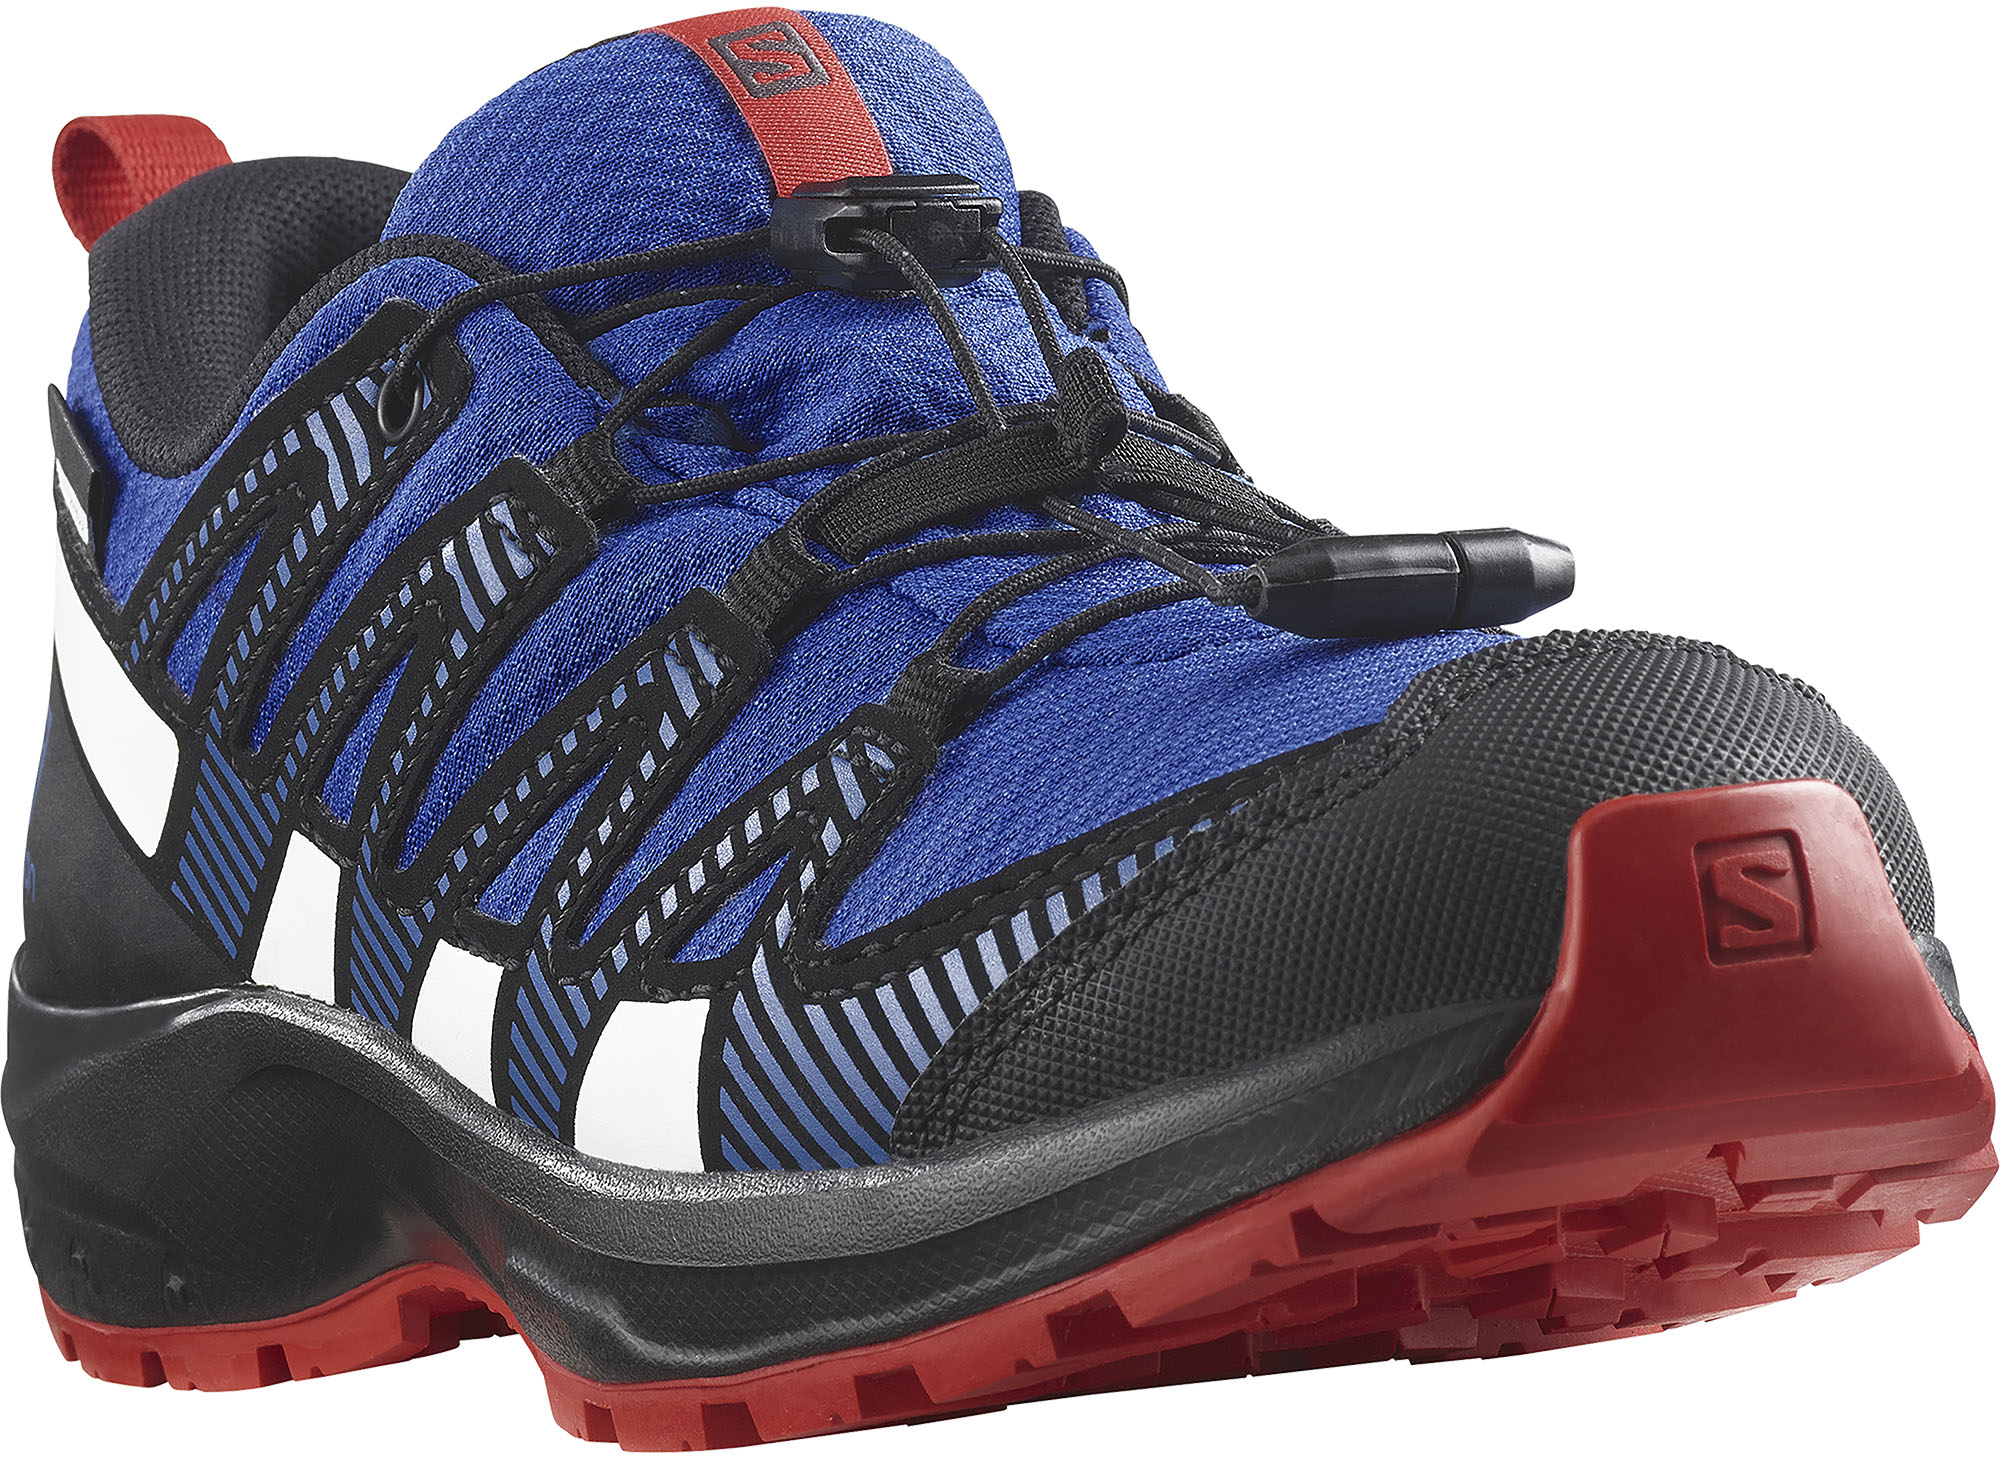 Salomon XA PRO V8 CLIMASALOMON Waterproof Hiking Shoe, Lapis Blue/Black/Fiery Red, 36 EU